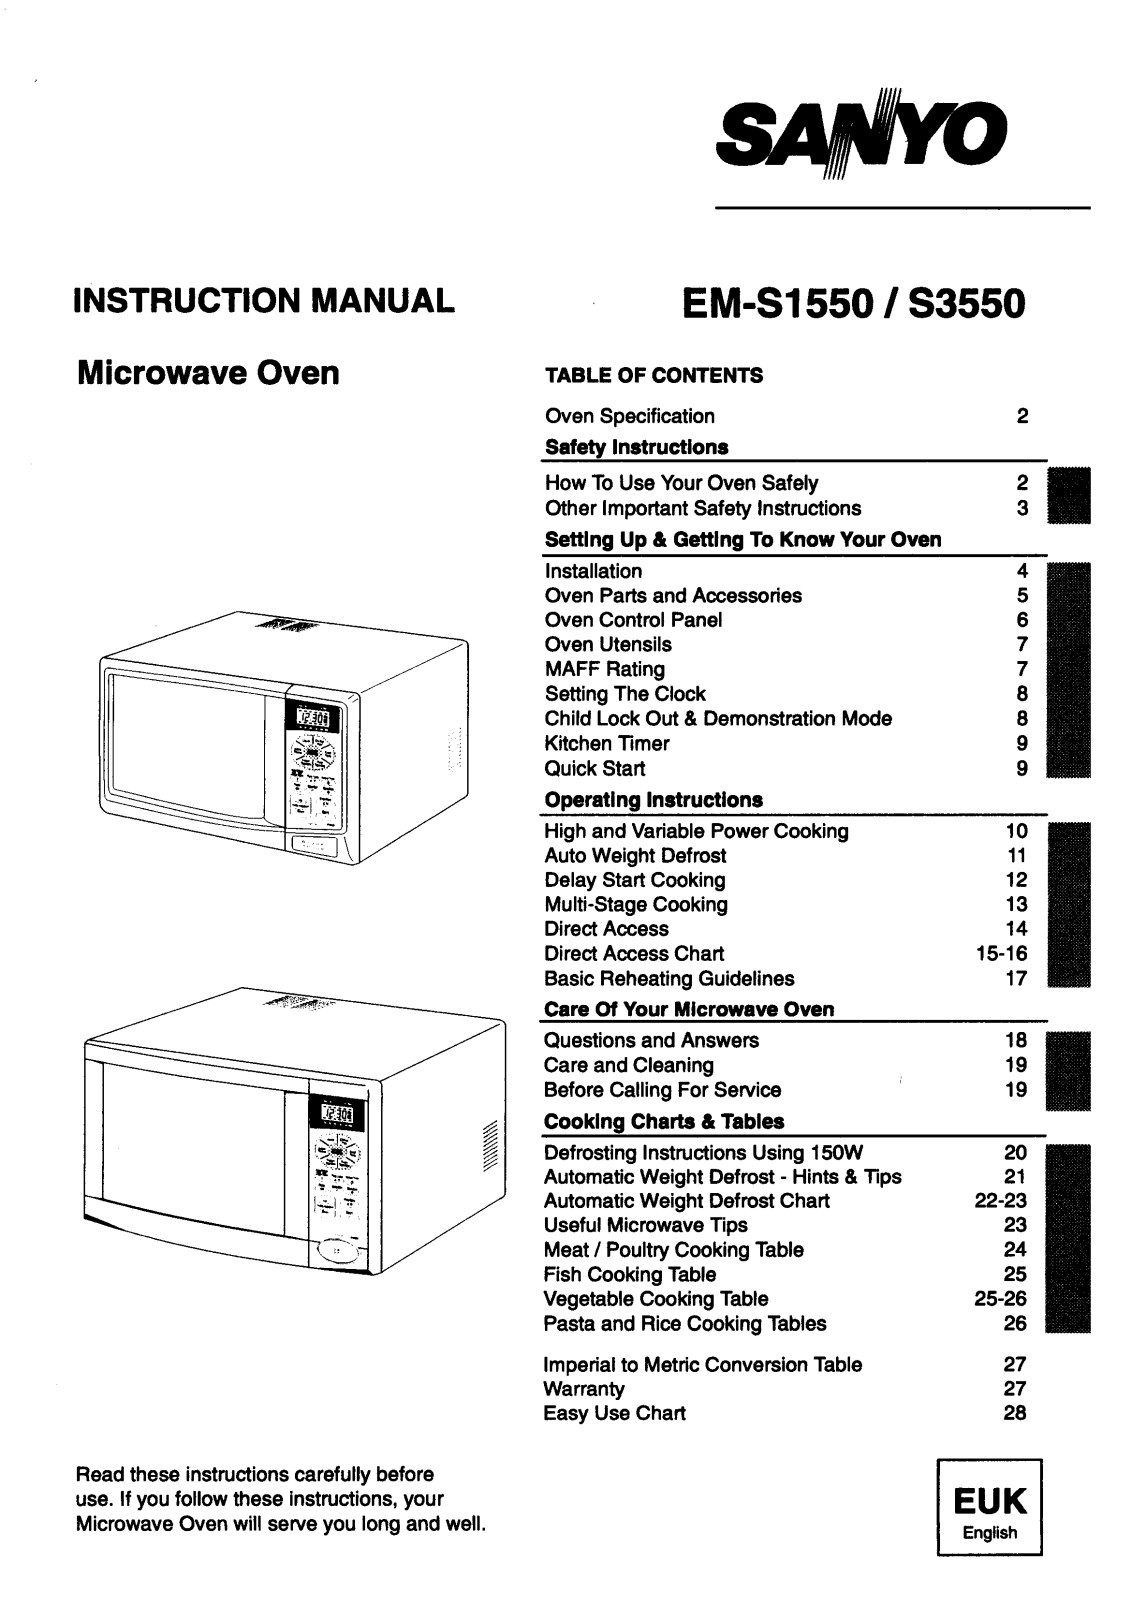 Sanyo EM-S3550, EM-S1550 Instruction Manual